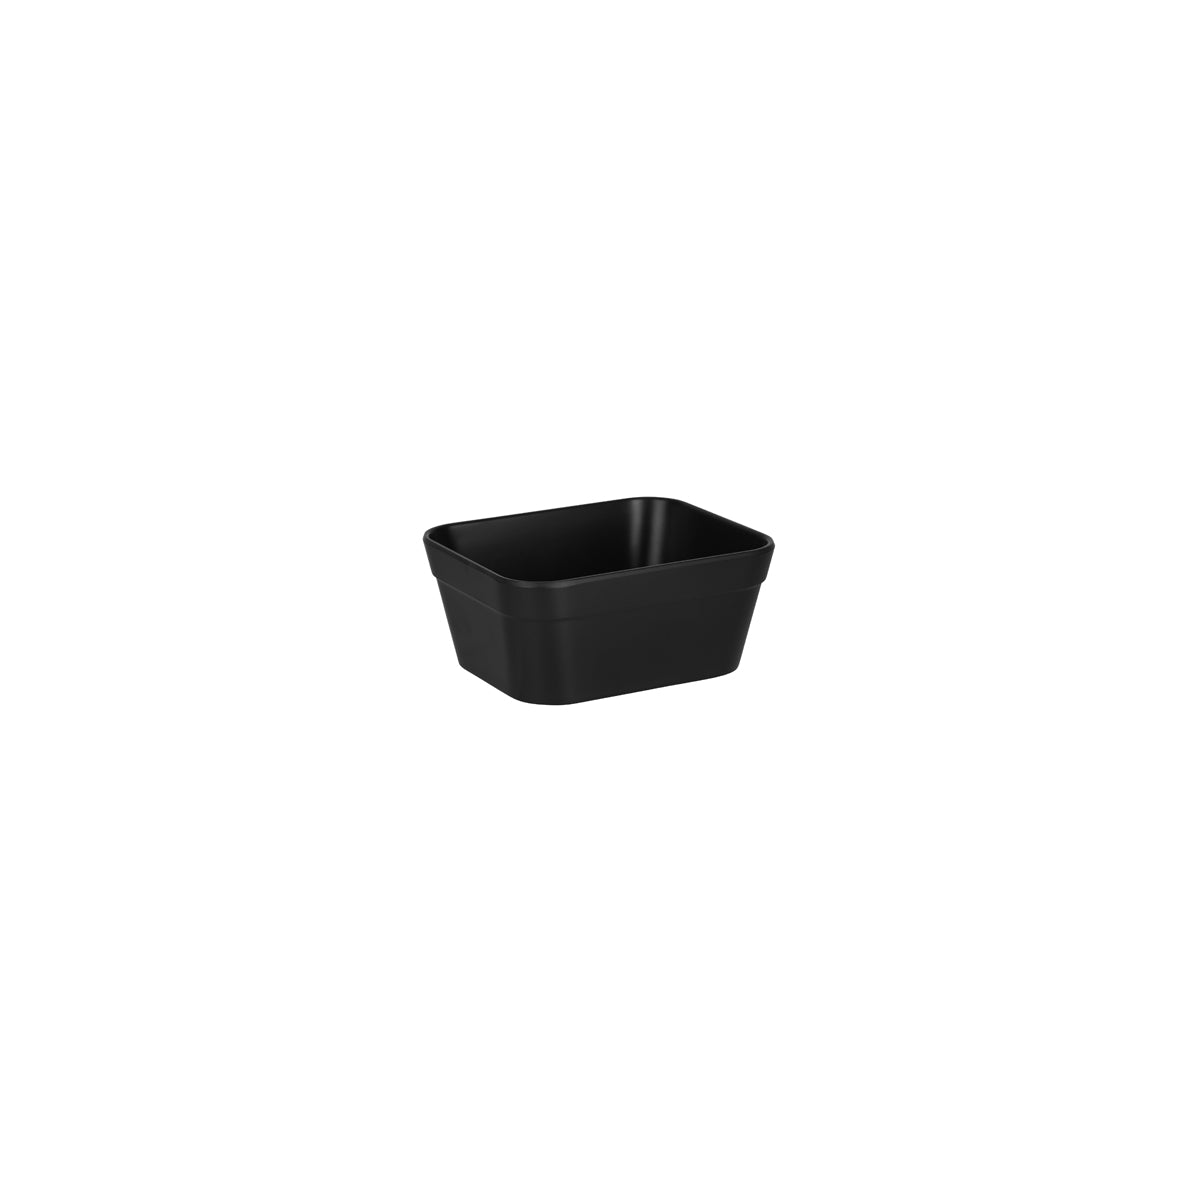 46386 Zicco Bento Box Black Insert Bowl Solid Medium Tomkin Australia Hospitality Supplies